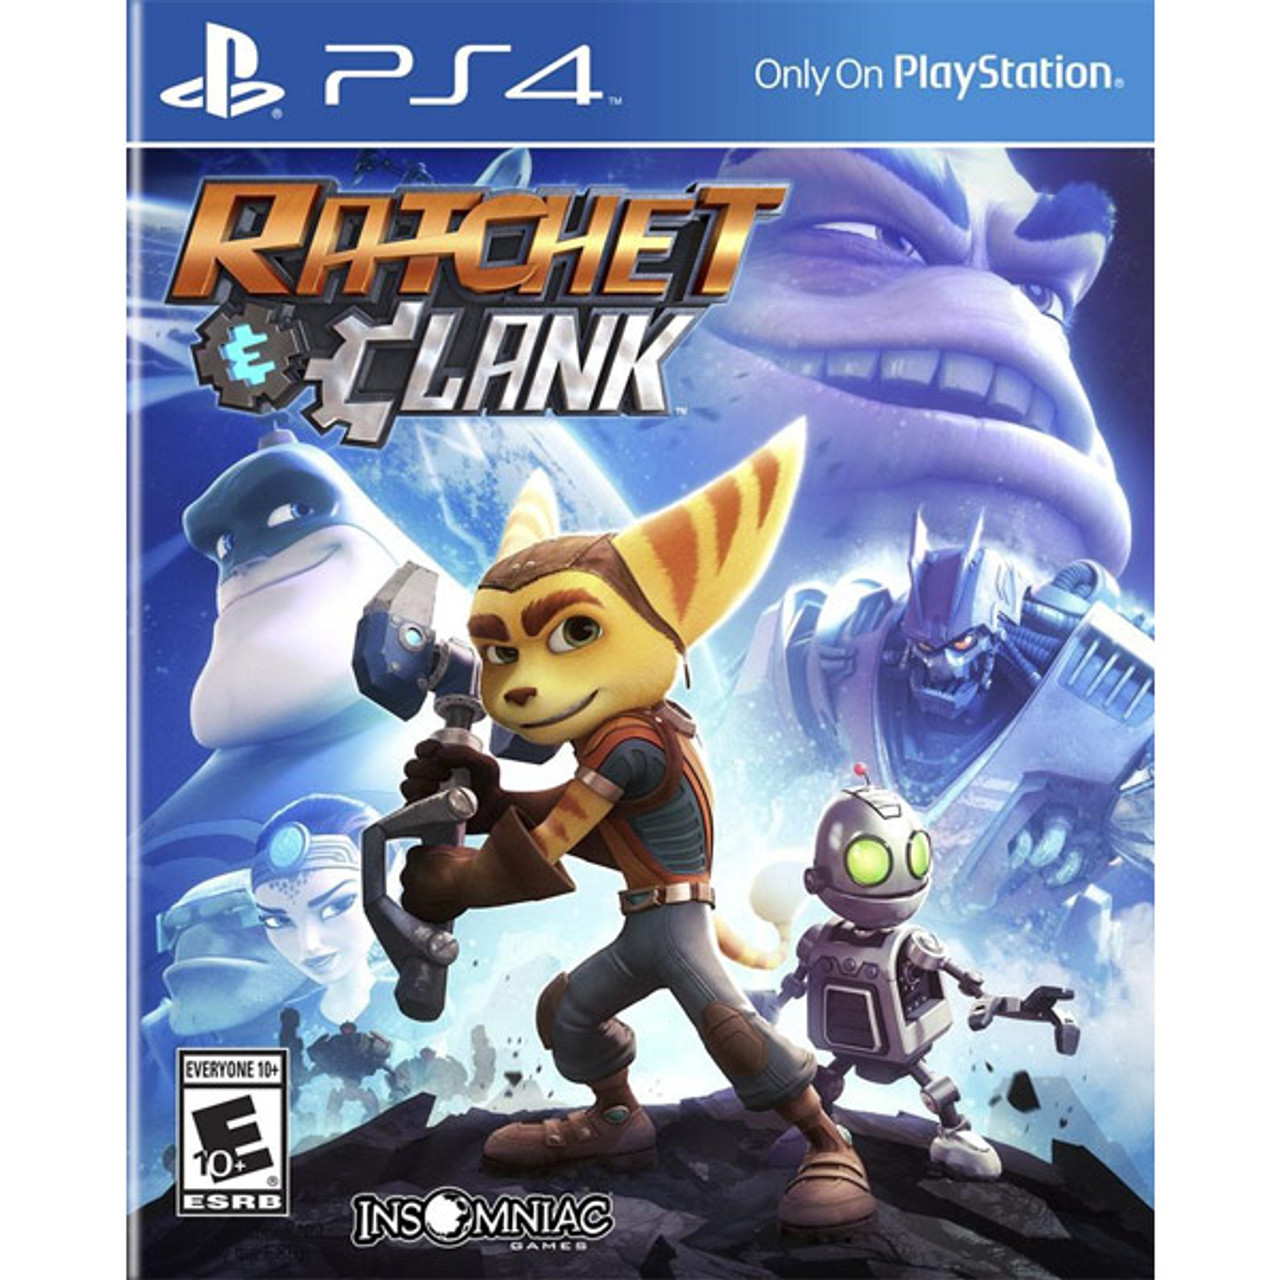 Ratchet & Clank, PS2 / PS3 / Vita / PS4